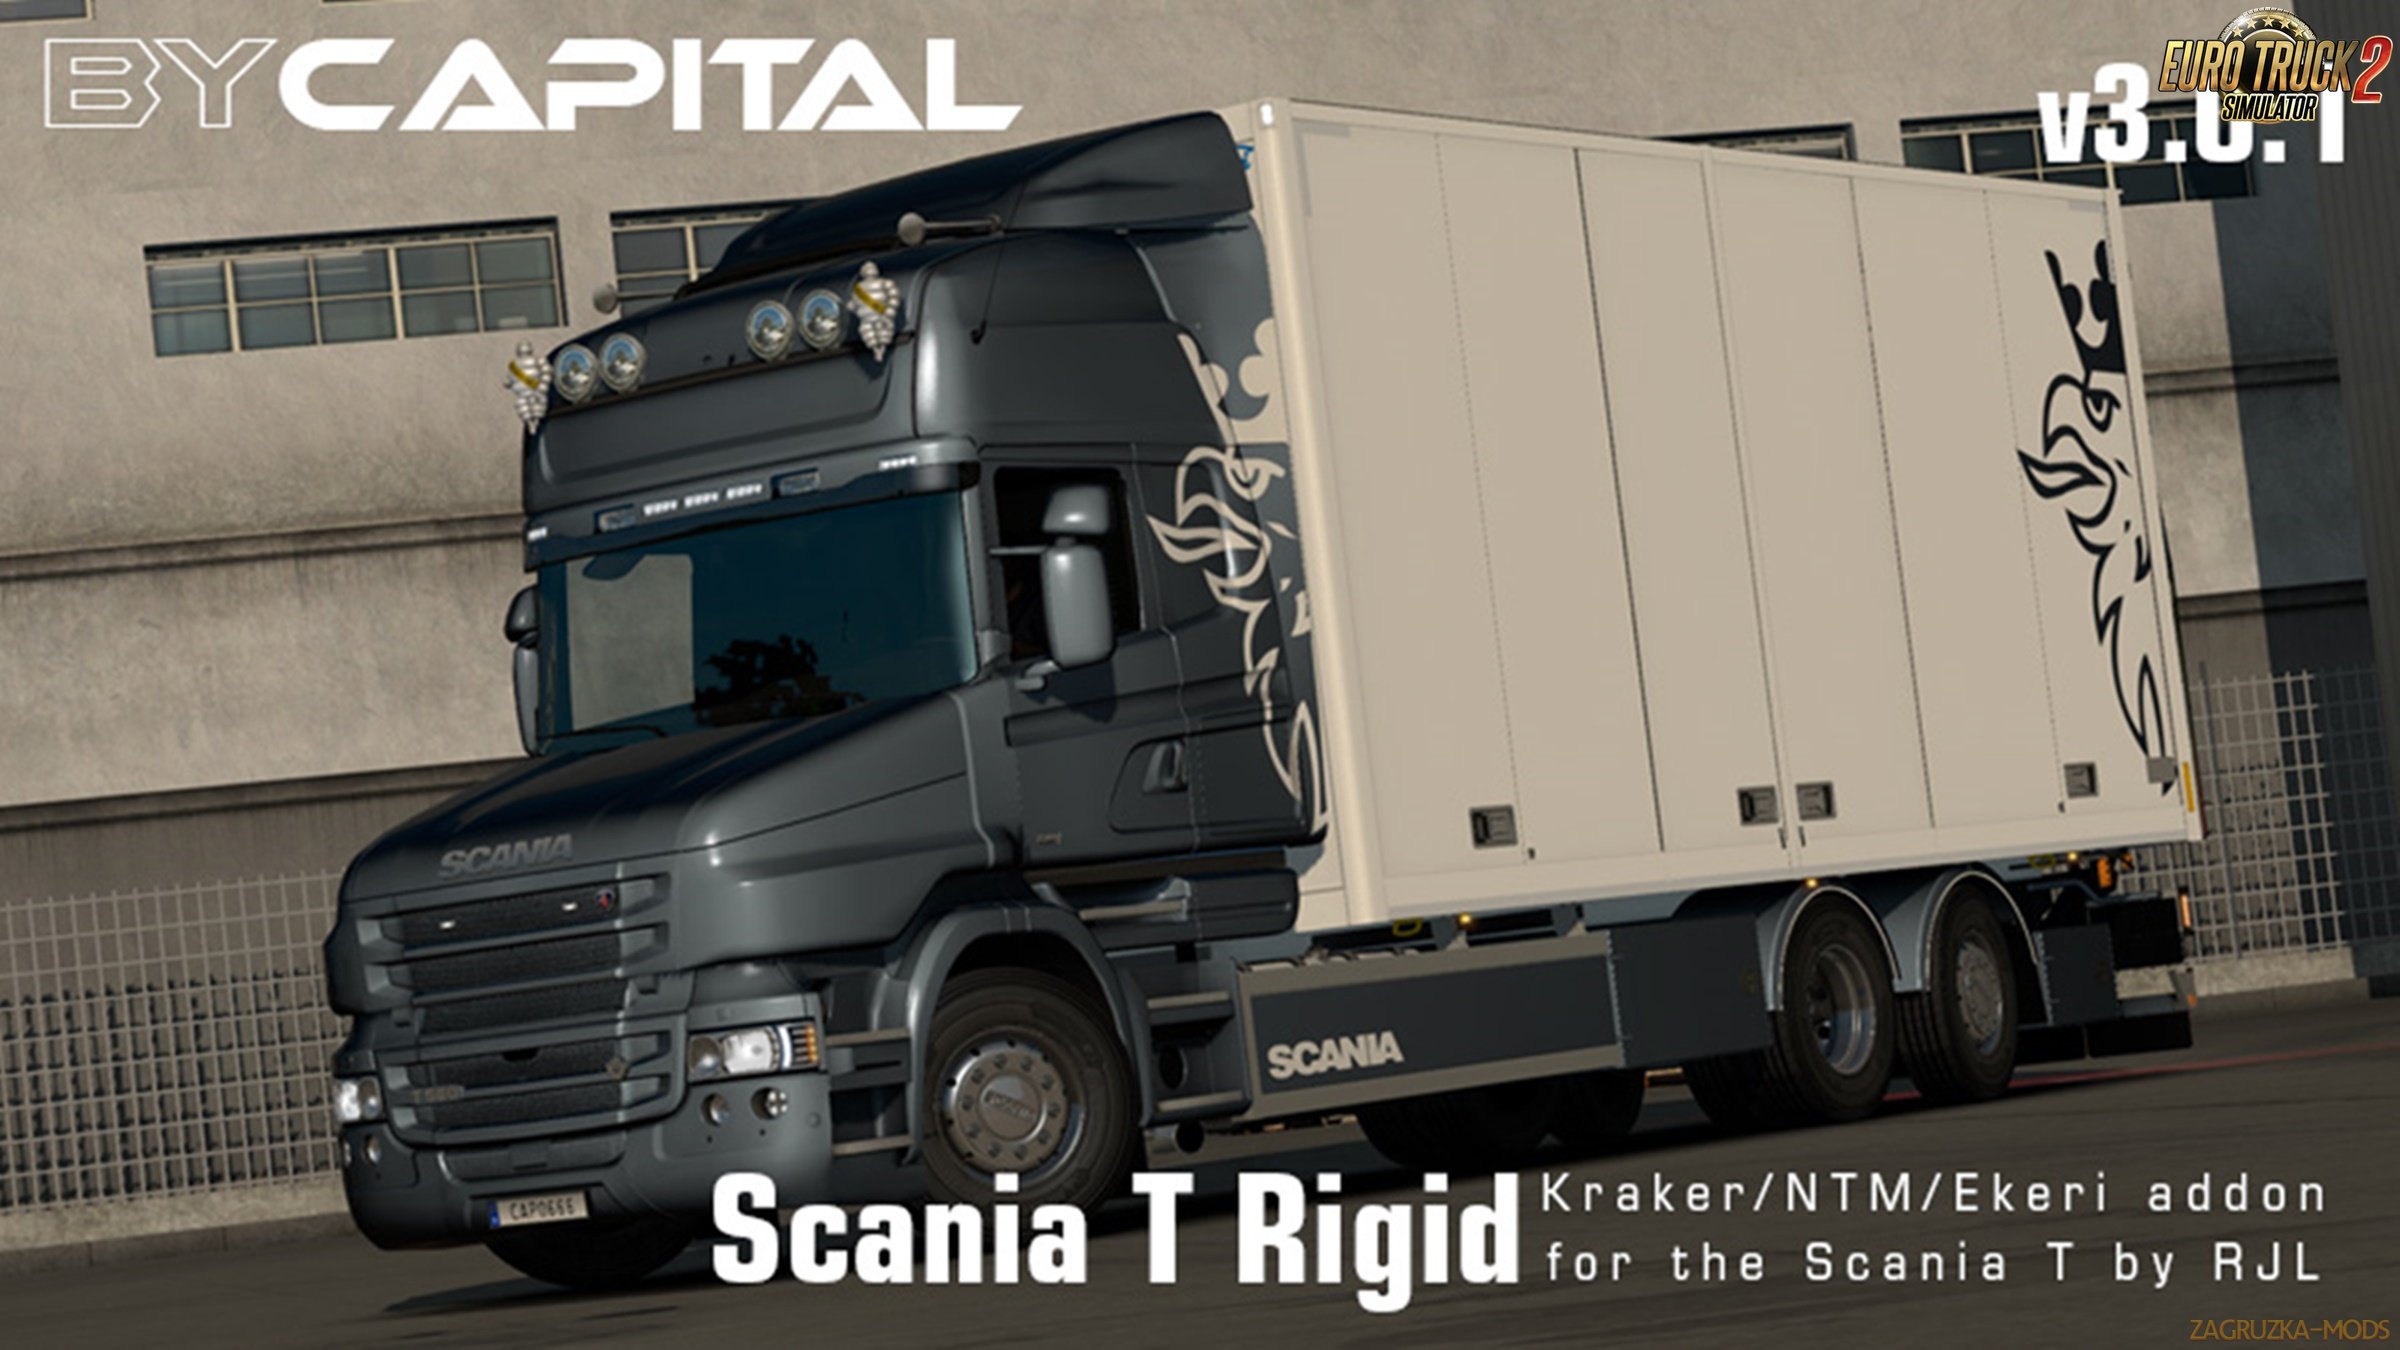 Rigid chassis for RJL Scania T & T4 (Kraker/NTM/Ekeri) v3.0.1 - ByCapital